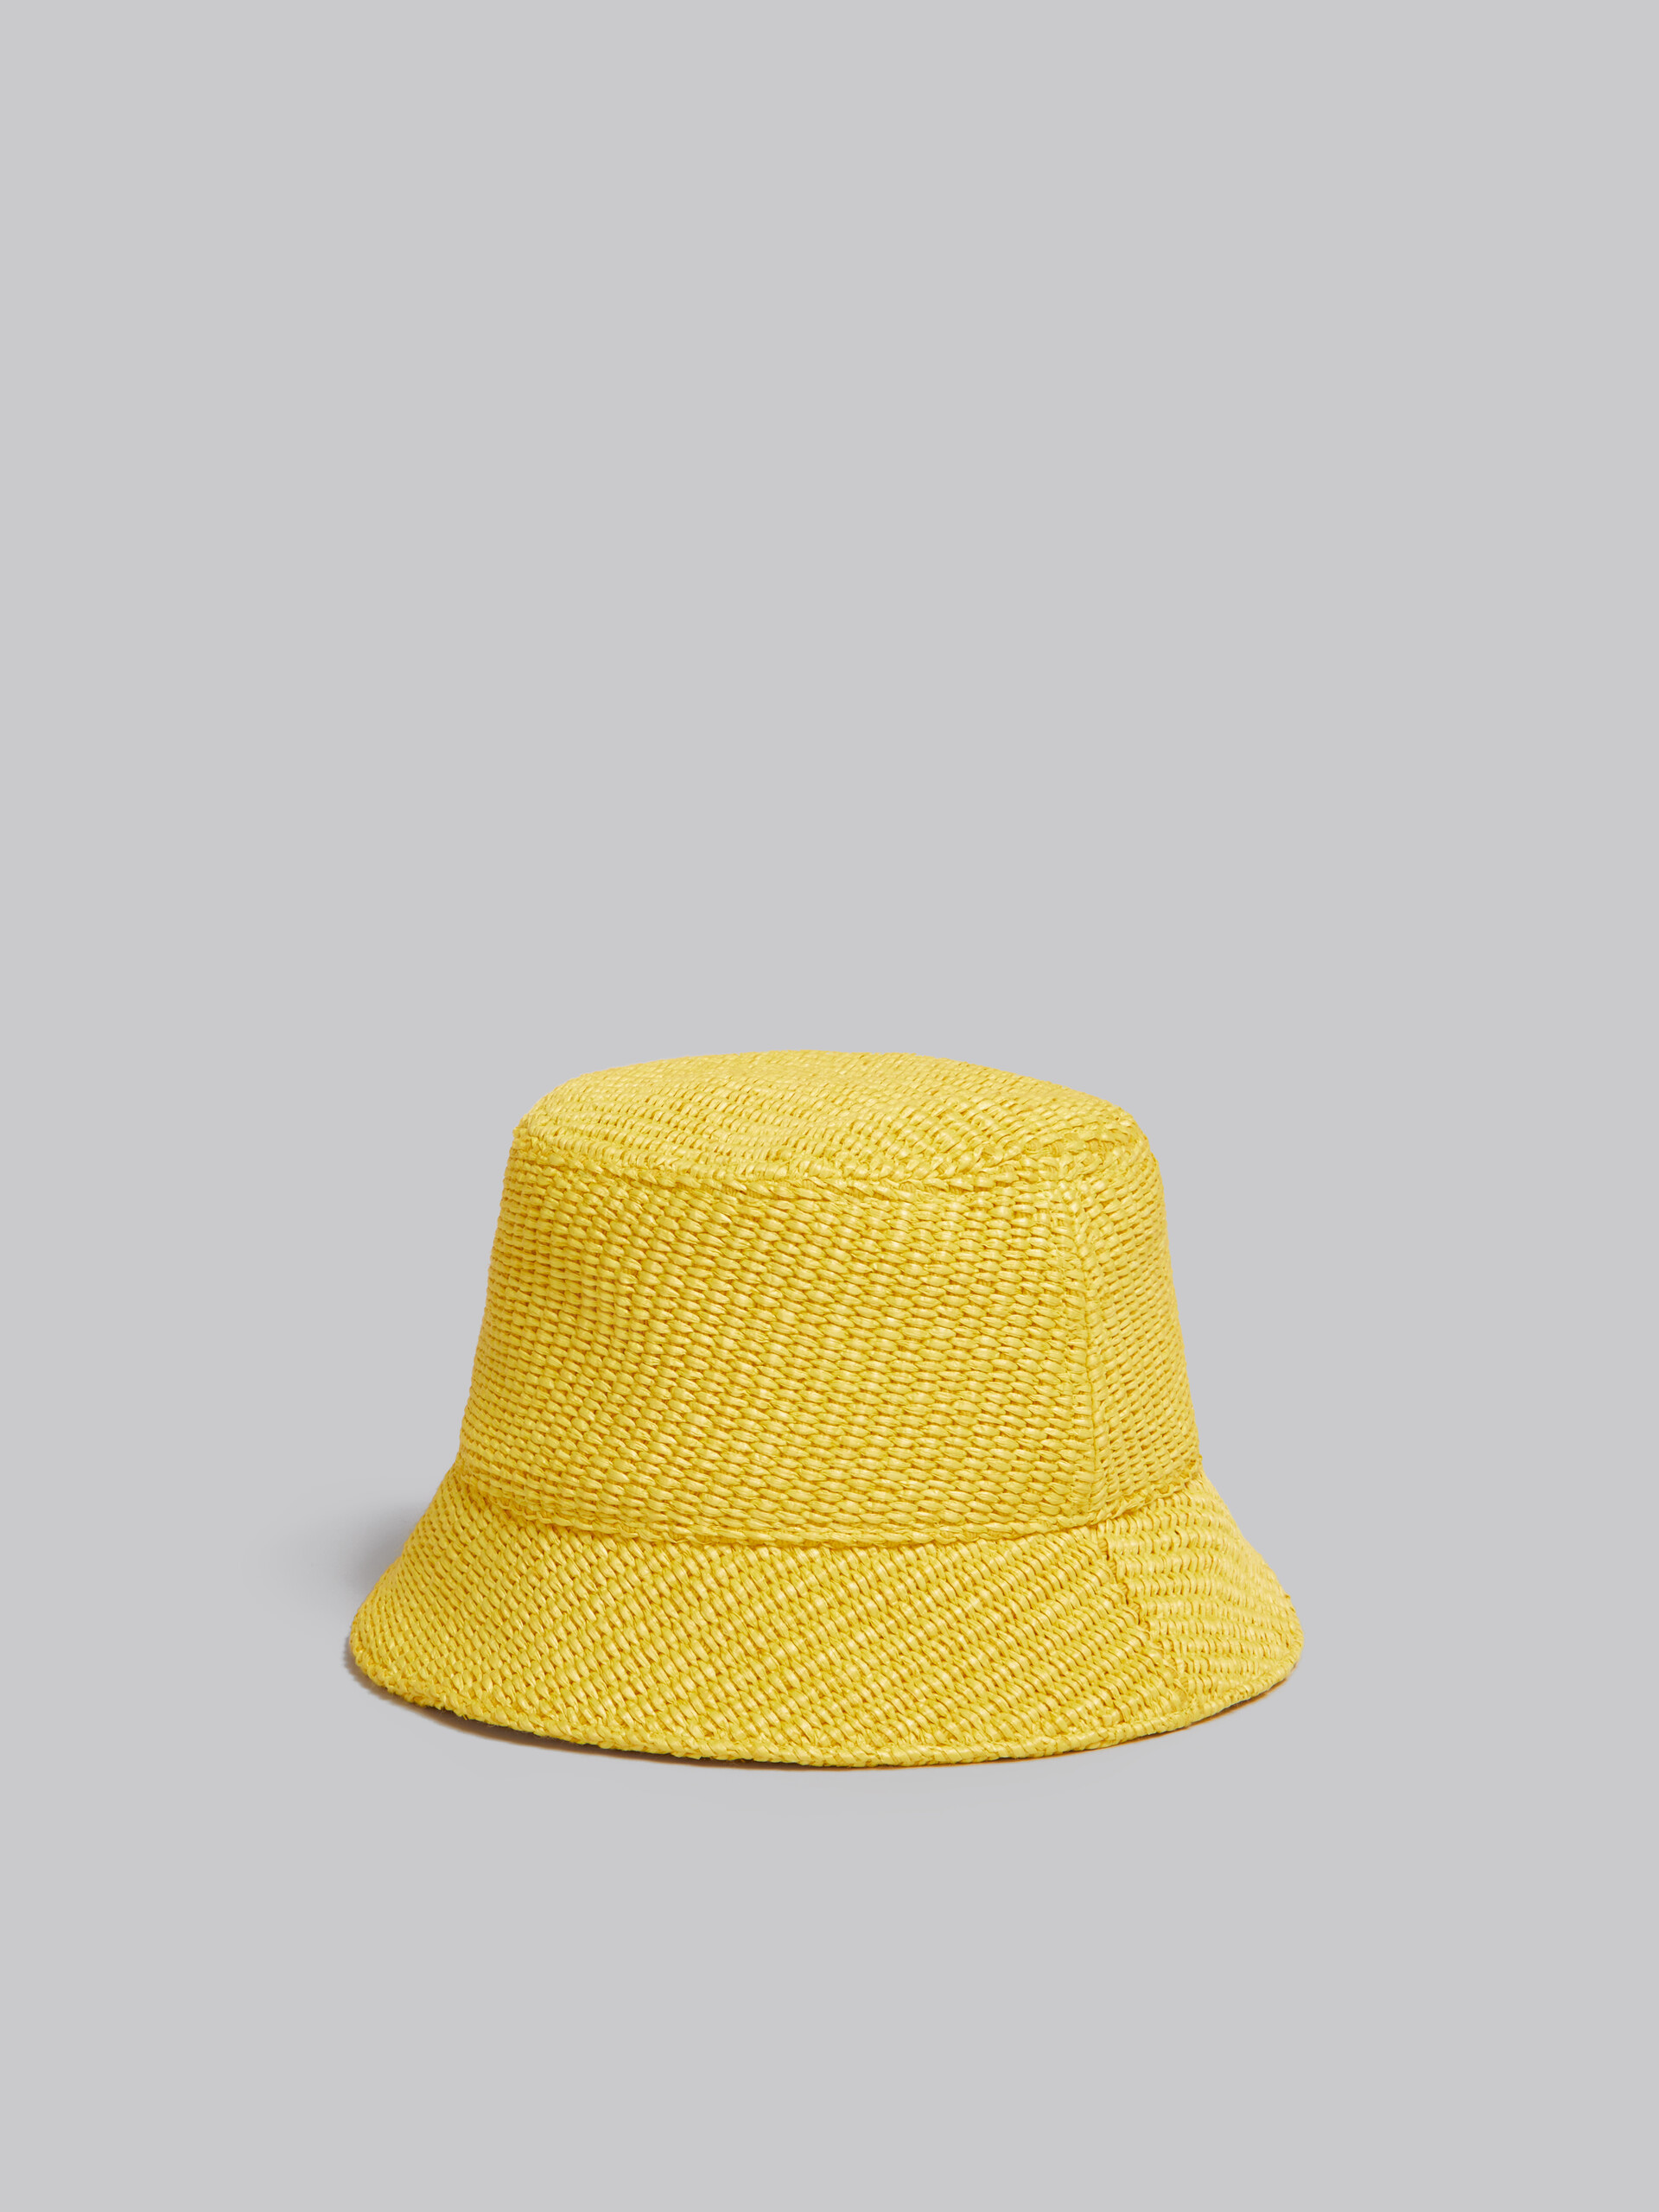 Marni x No Vacancy Inn - Yellow hat in raffia fabric - Hats - Image 3